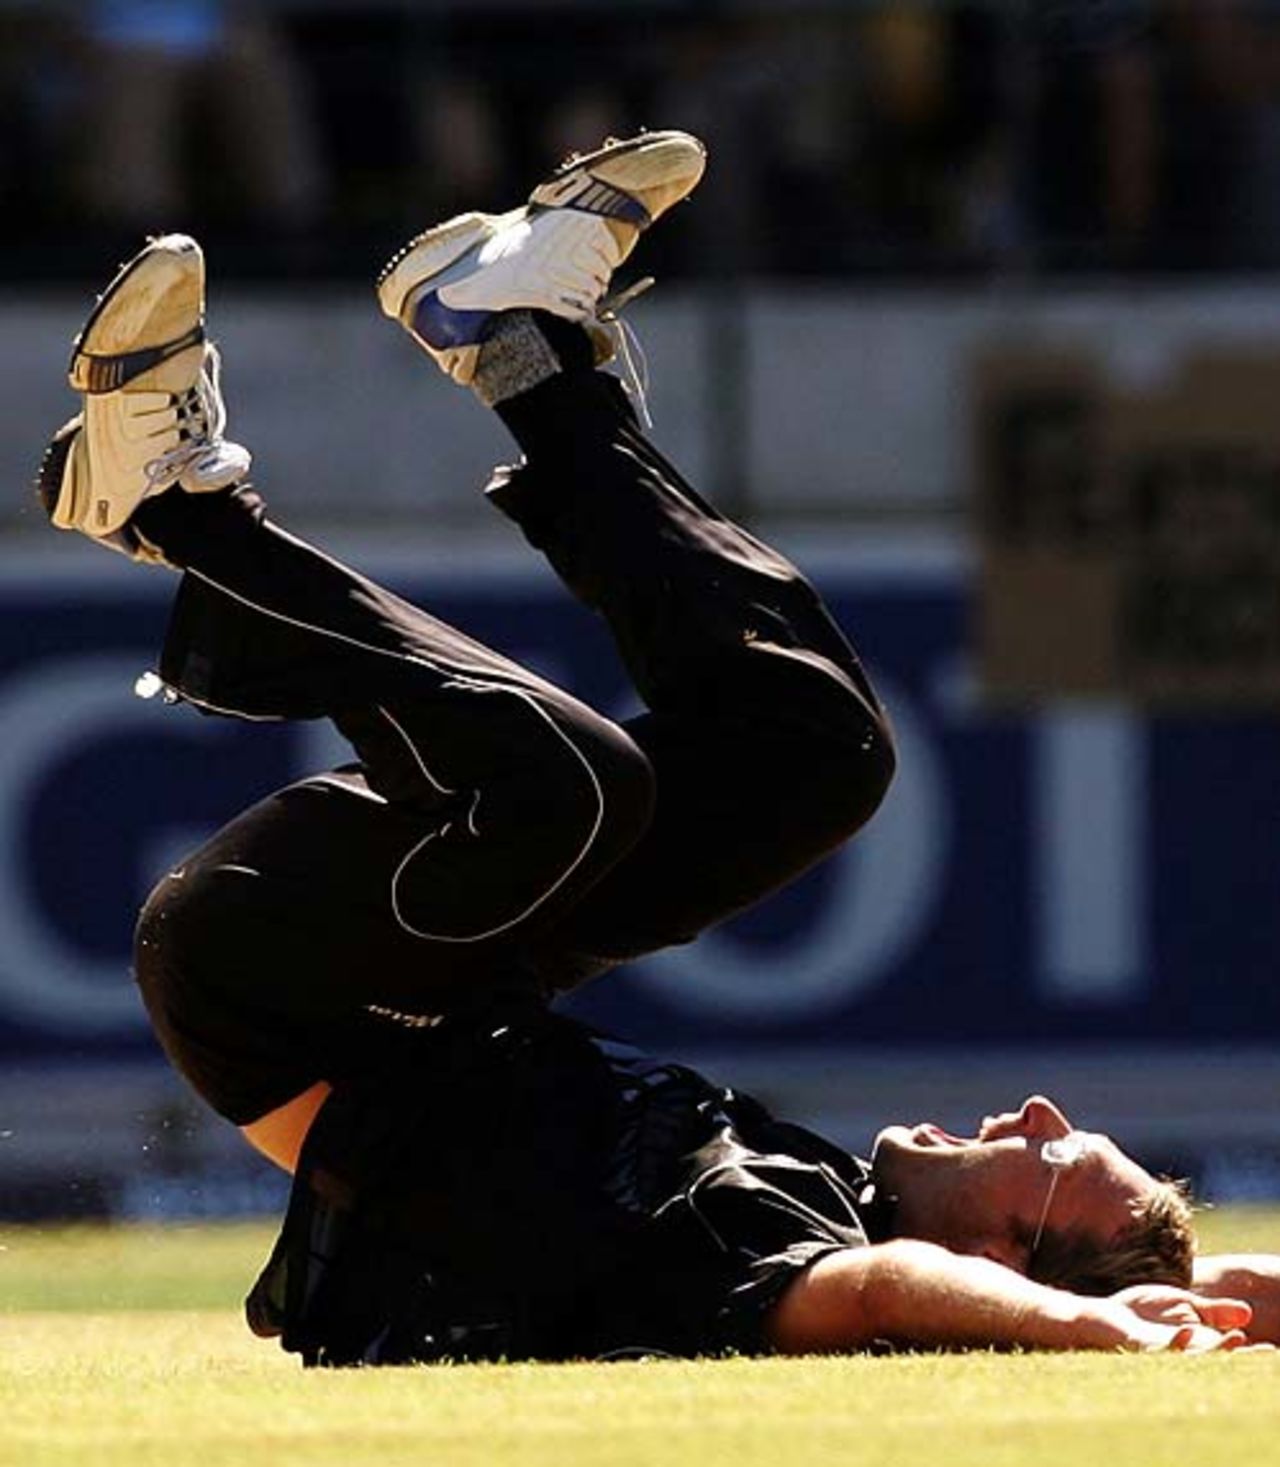 Daniel Vettori goes to the ground while appealing, Australia v New Zealand, 1st ODI, Auckland, February 19, 2005